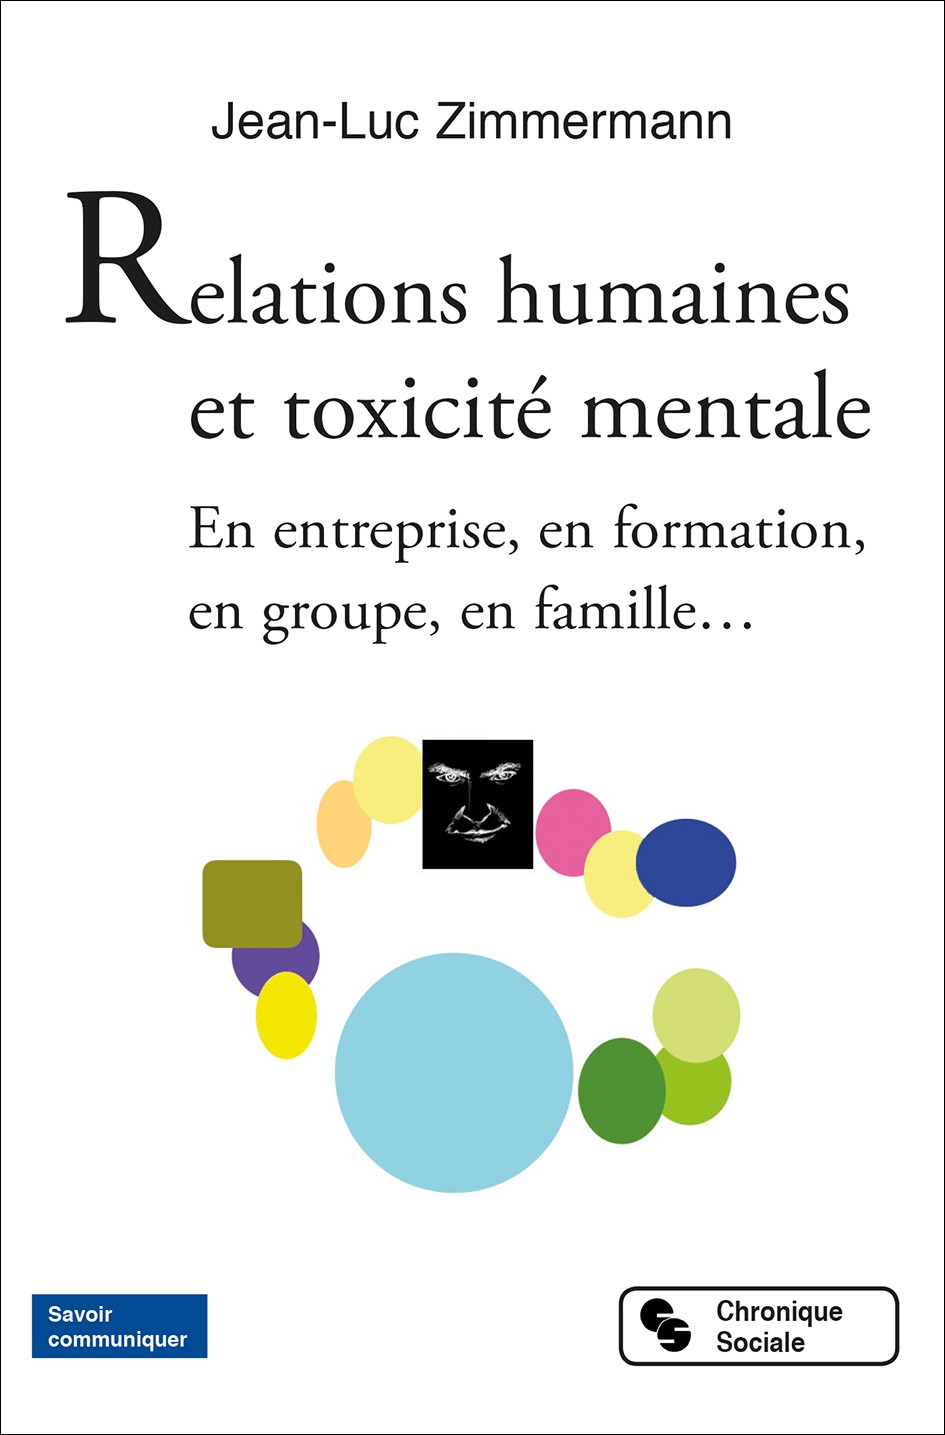 Image Relations humaines et toxicité mentale : en entreprise, en formation, en groupe, en famille